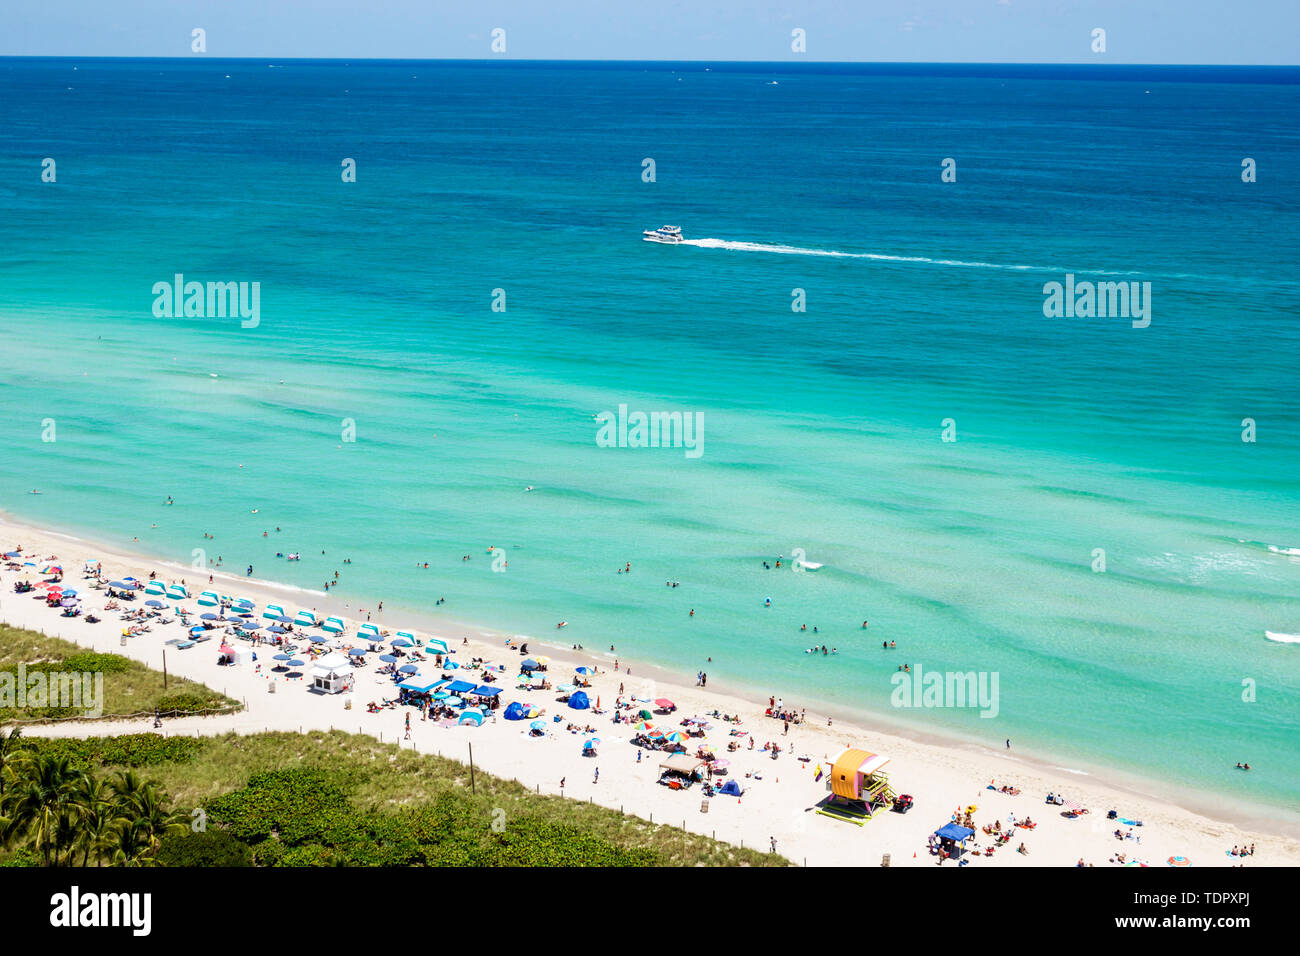 Miami Beach Florida,North Beach,Atlantic Ocean,sunbathers,public beach,sand,umbrellas,horizon,overhead view,clear blue water,sand bank,dunes,boat,FL19 Stock Photo